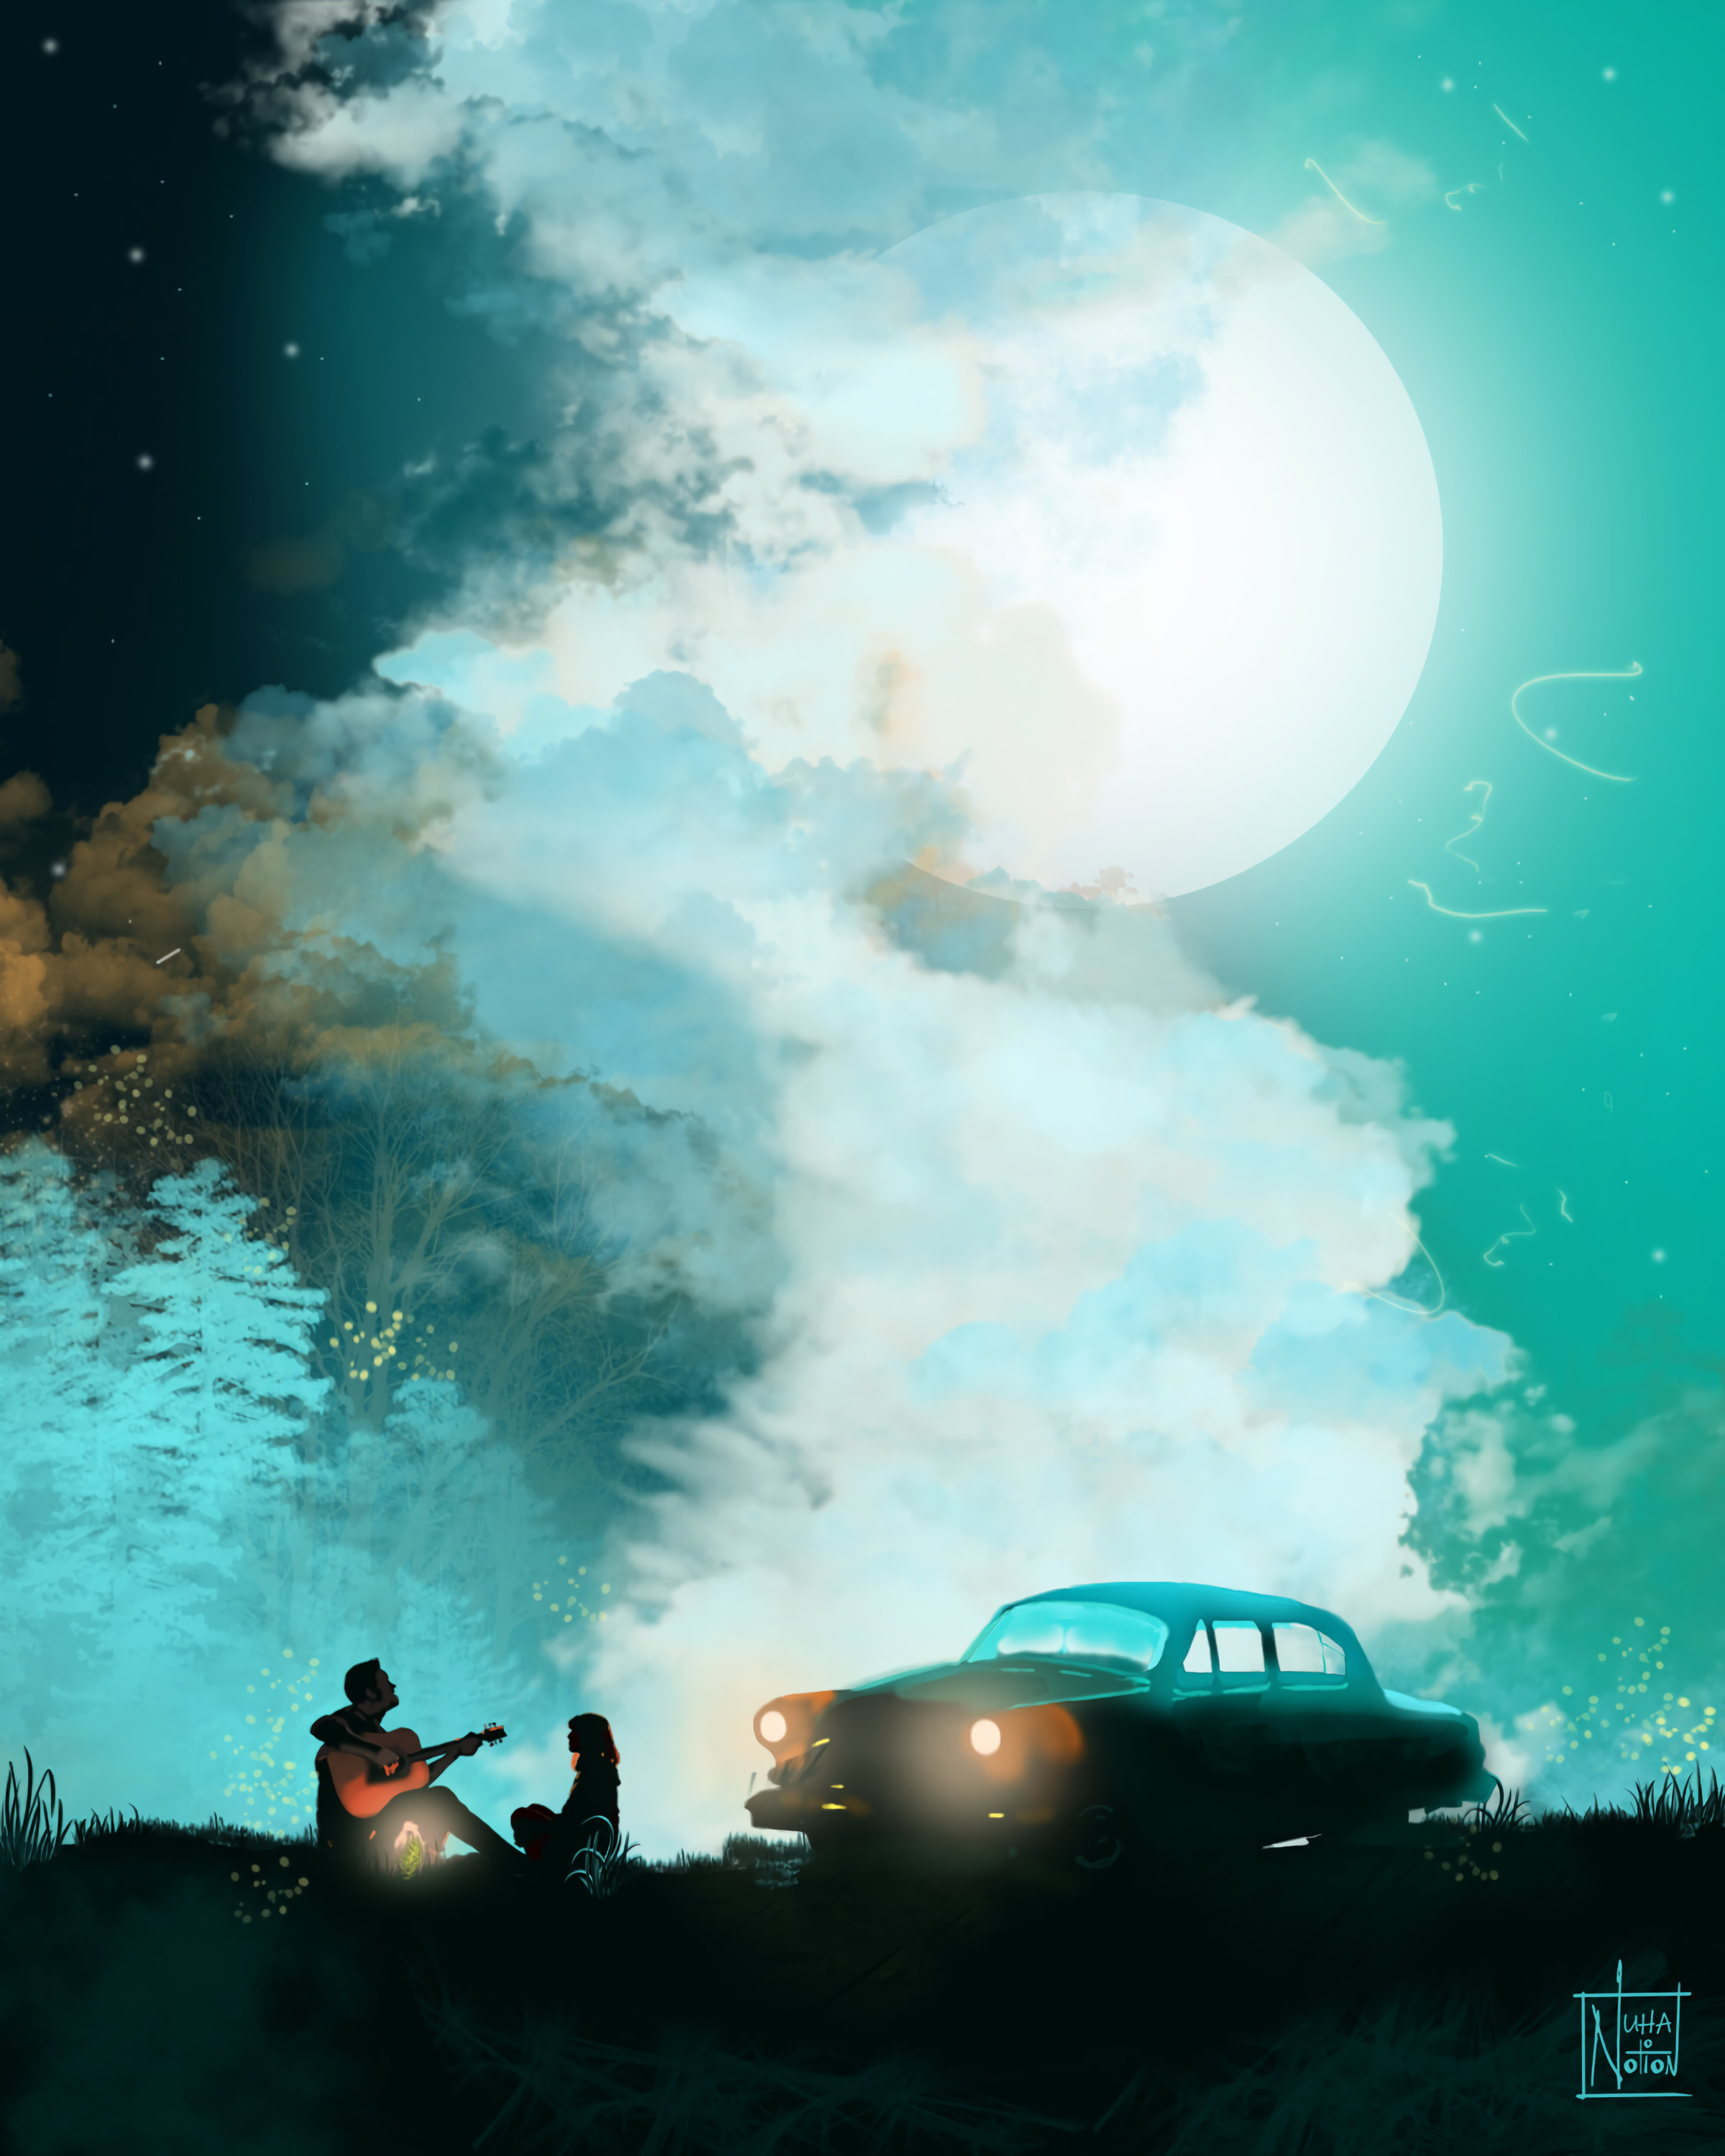 guitar, art, night, moon, silhouettes, car